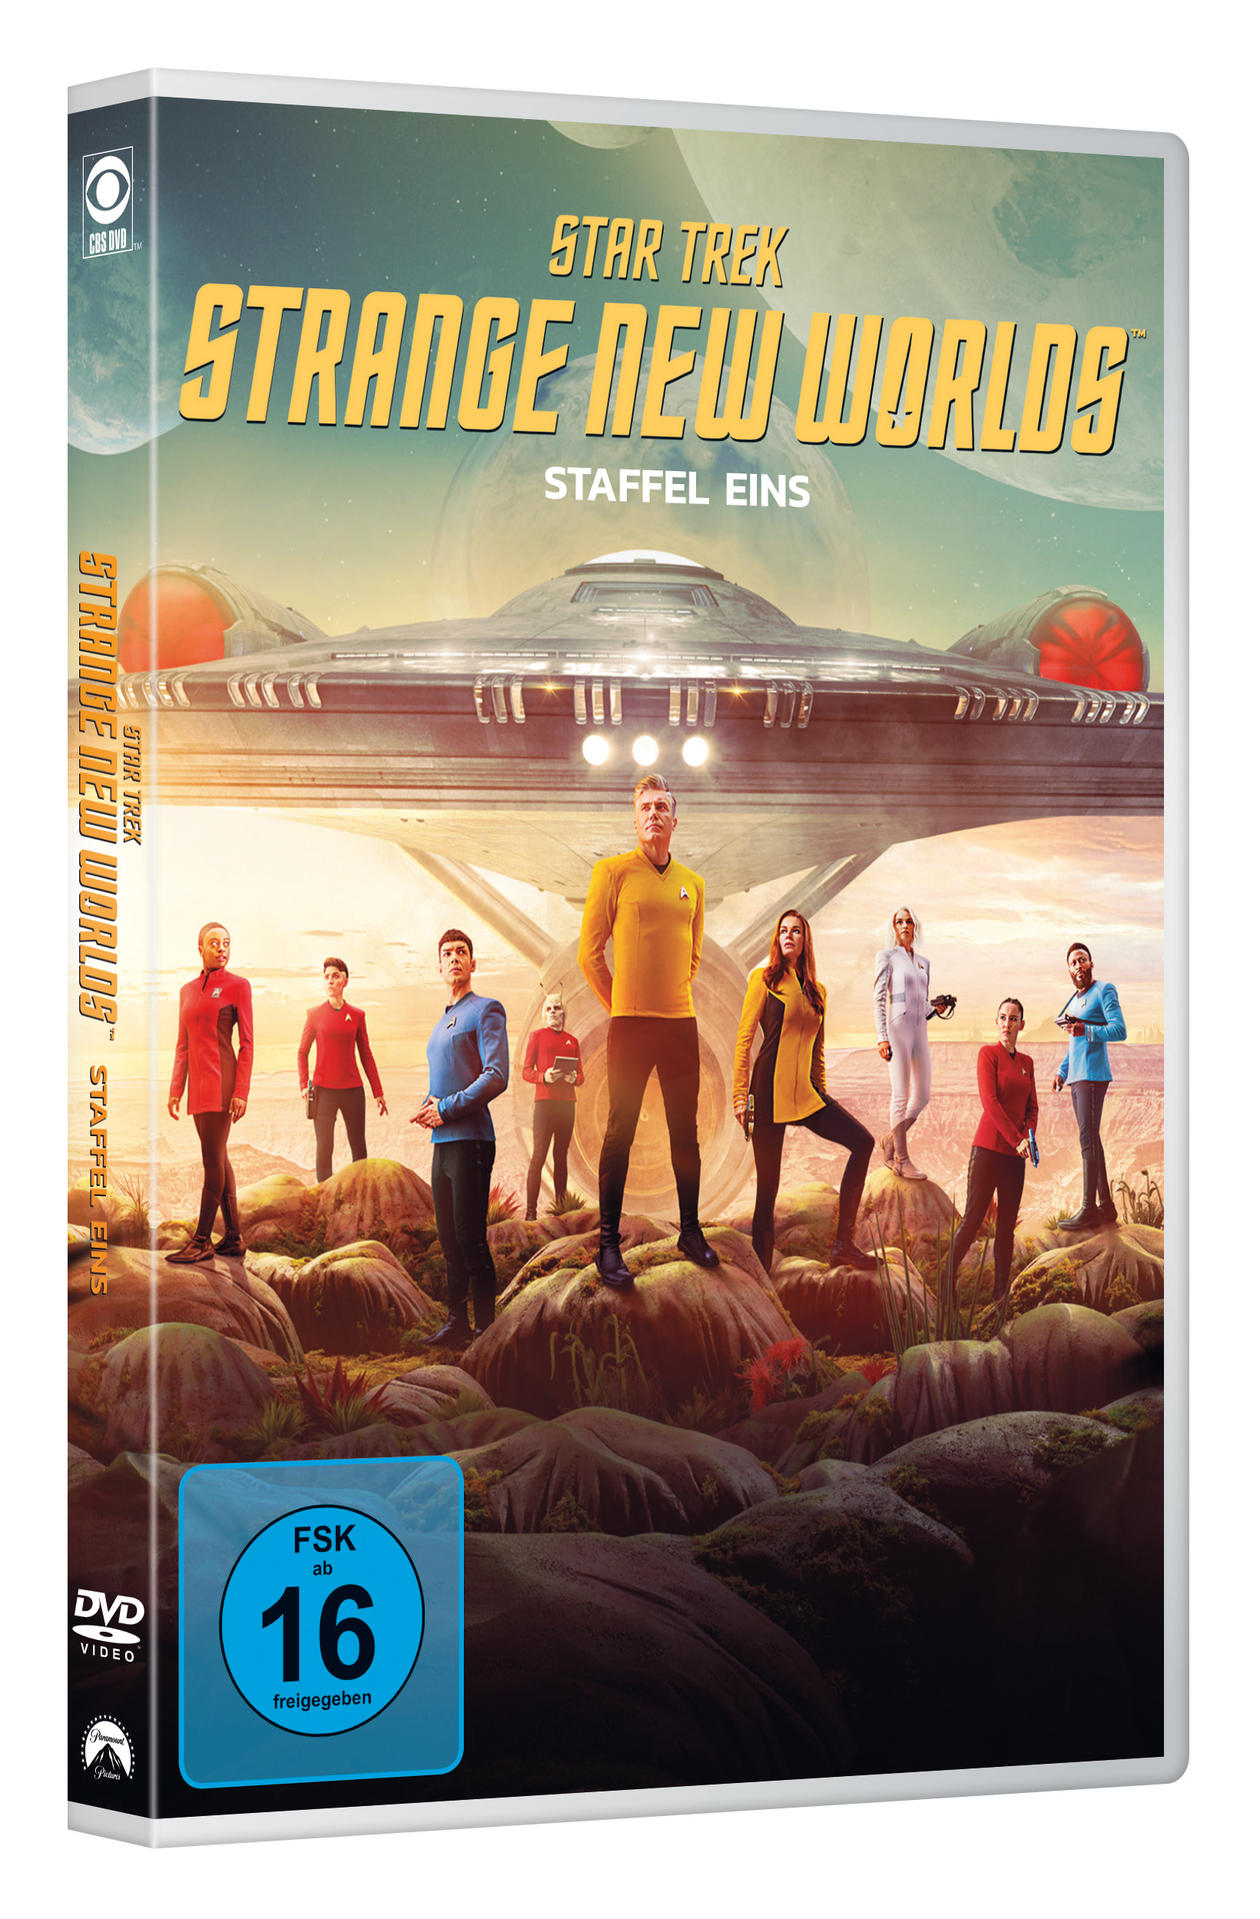 Strange DVD Worlds 1 - Staffel Trek: New Star